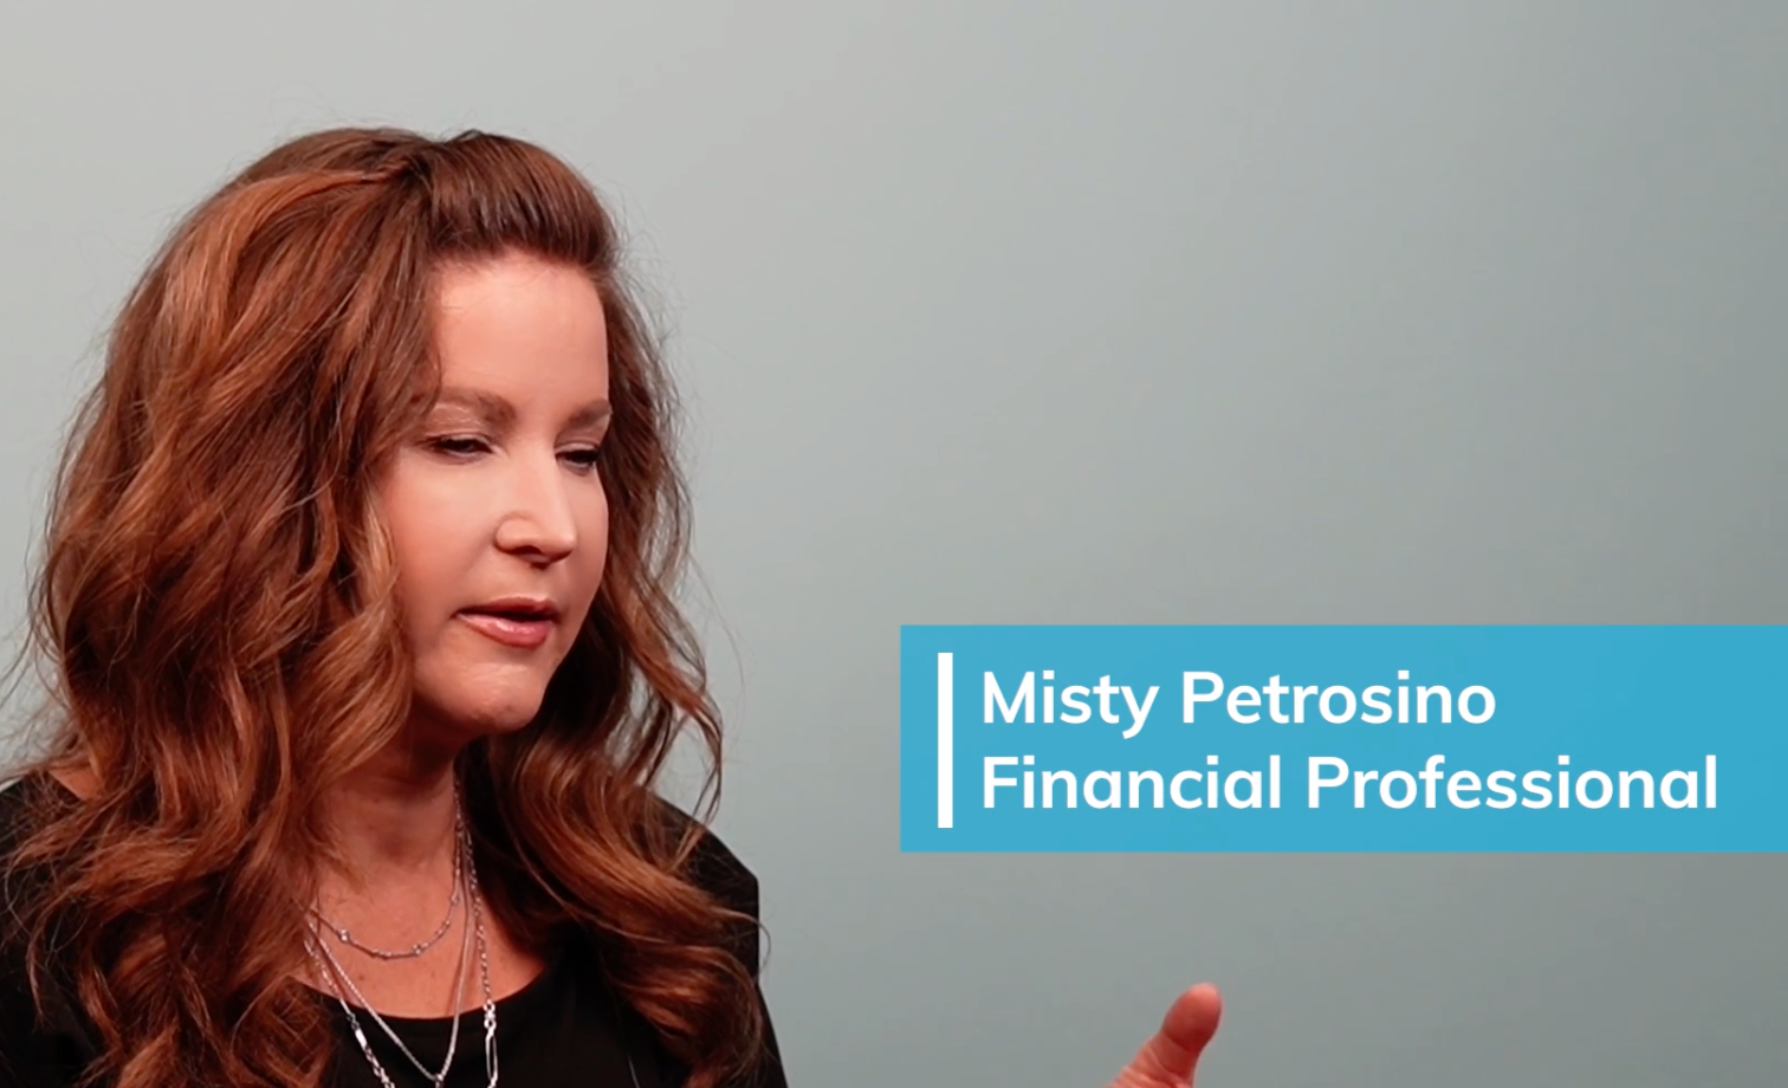 MistyPetrosino_FinancialProfessional